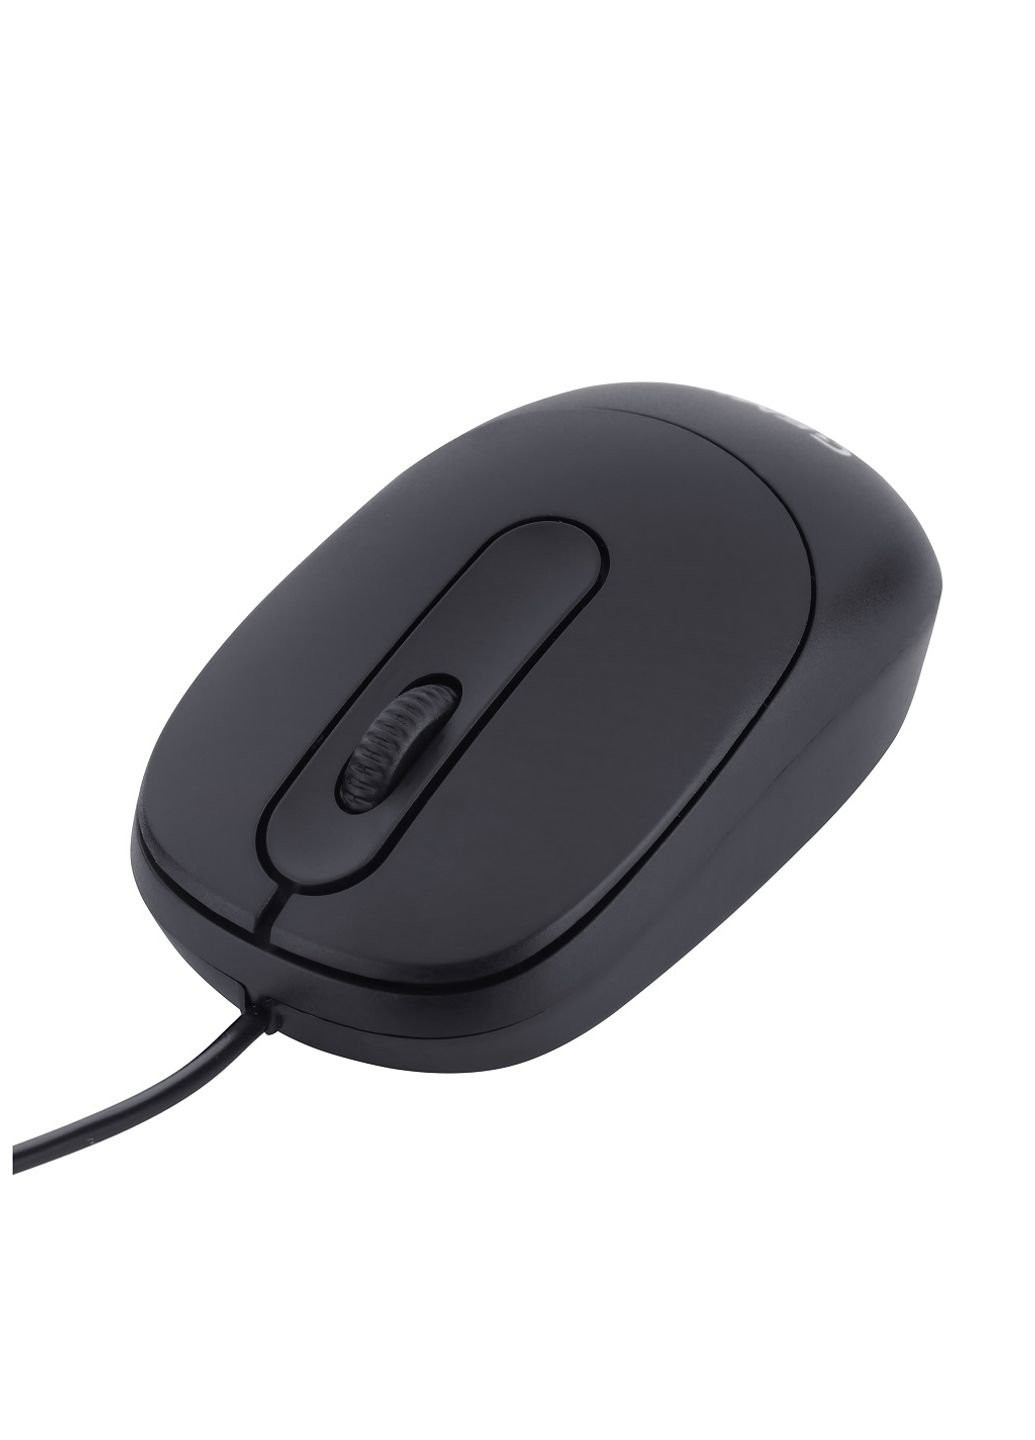 Мишка GM145 USB Black (GM145Bk) Gemix (253547102)